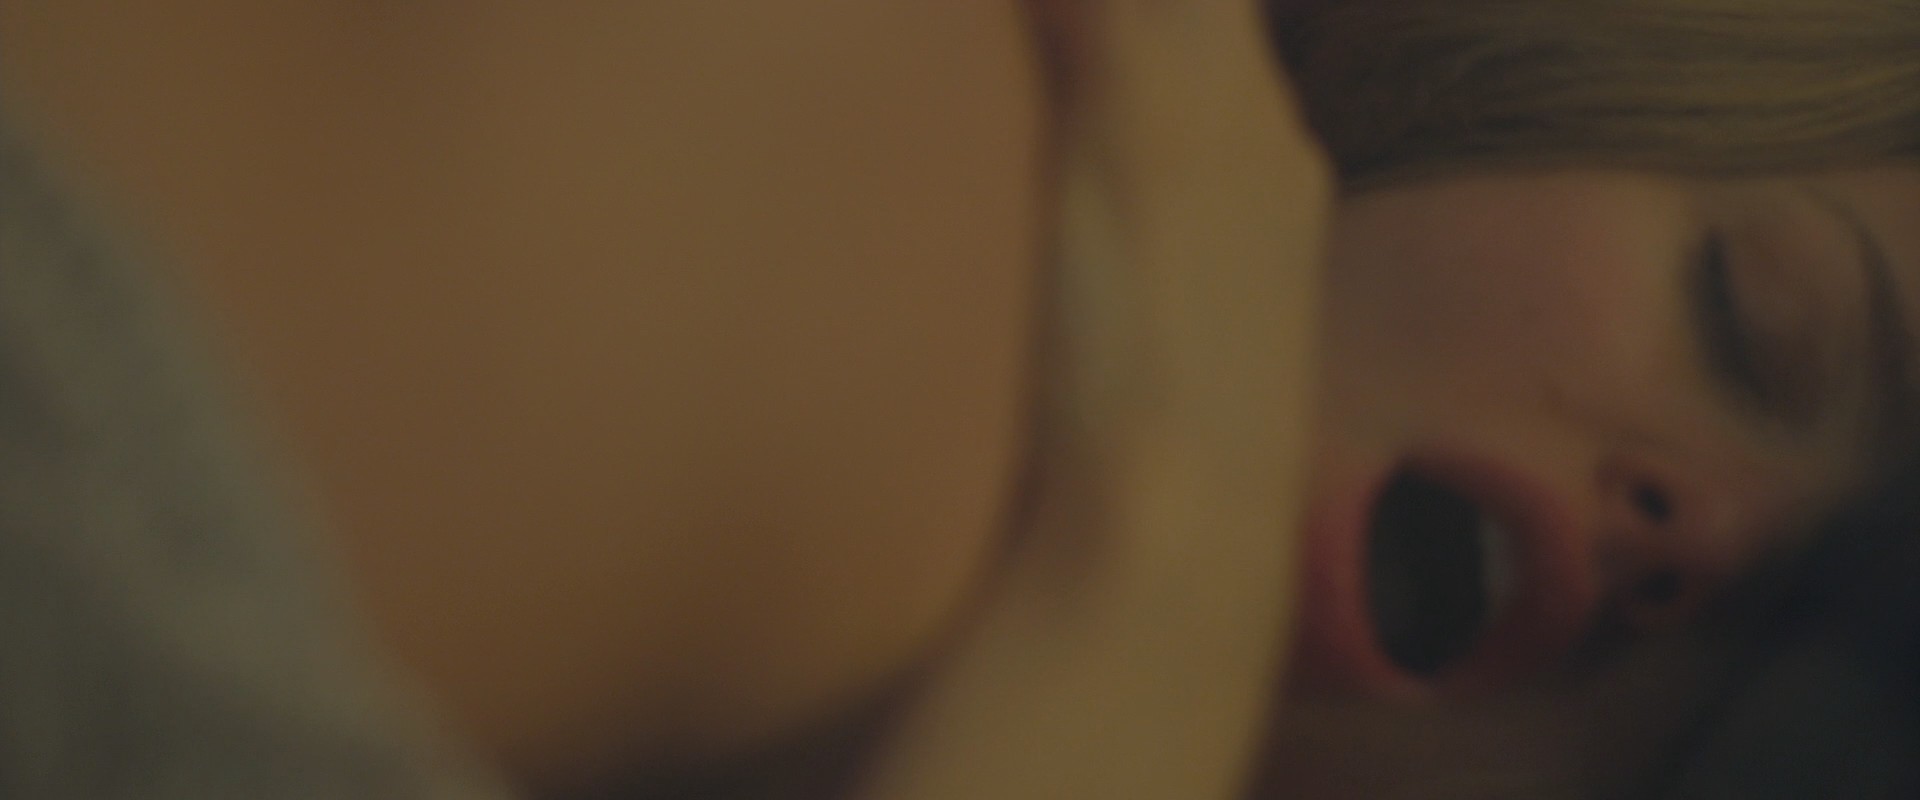 Amanda Seyfried - Fathers and Daughters 2015 1080p BluRay.mkv_snapshot_01.07_[2016.01.14_10.36.03].jpg